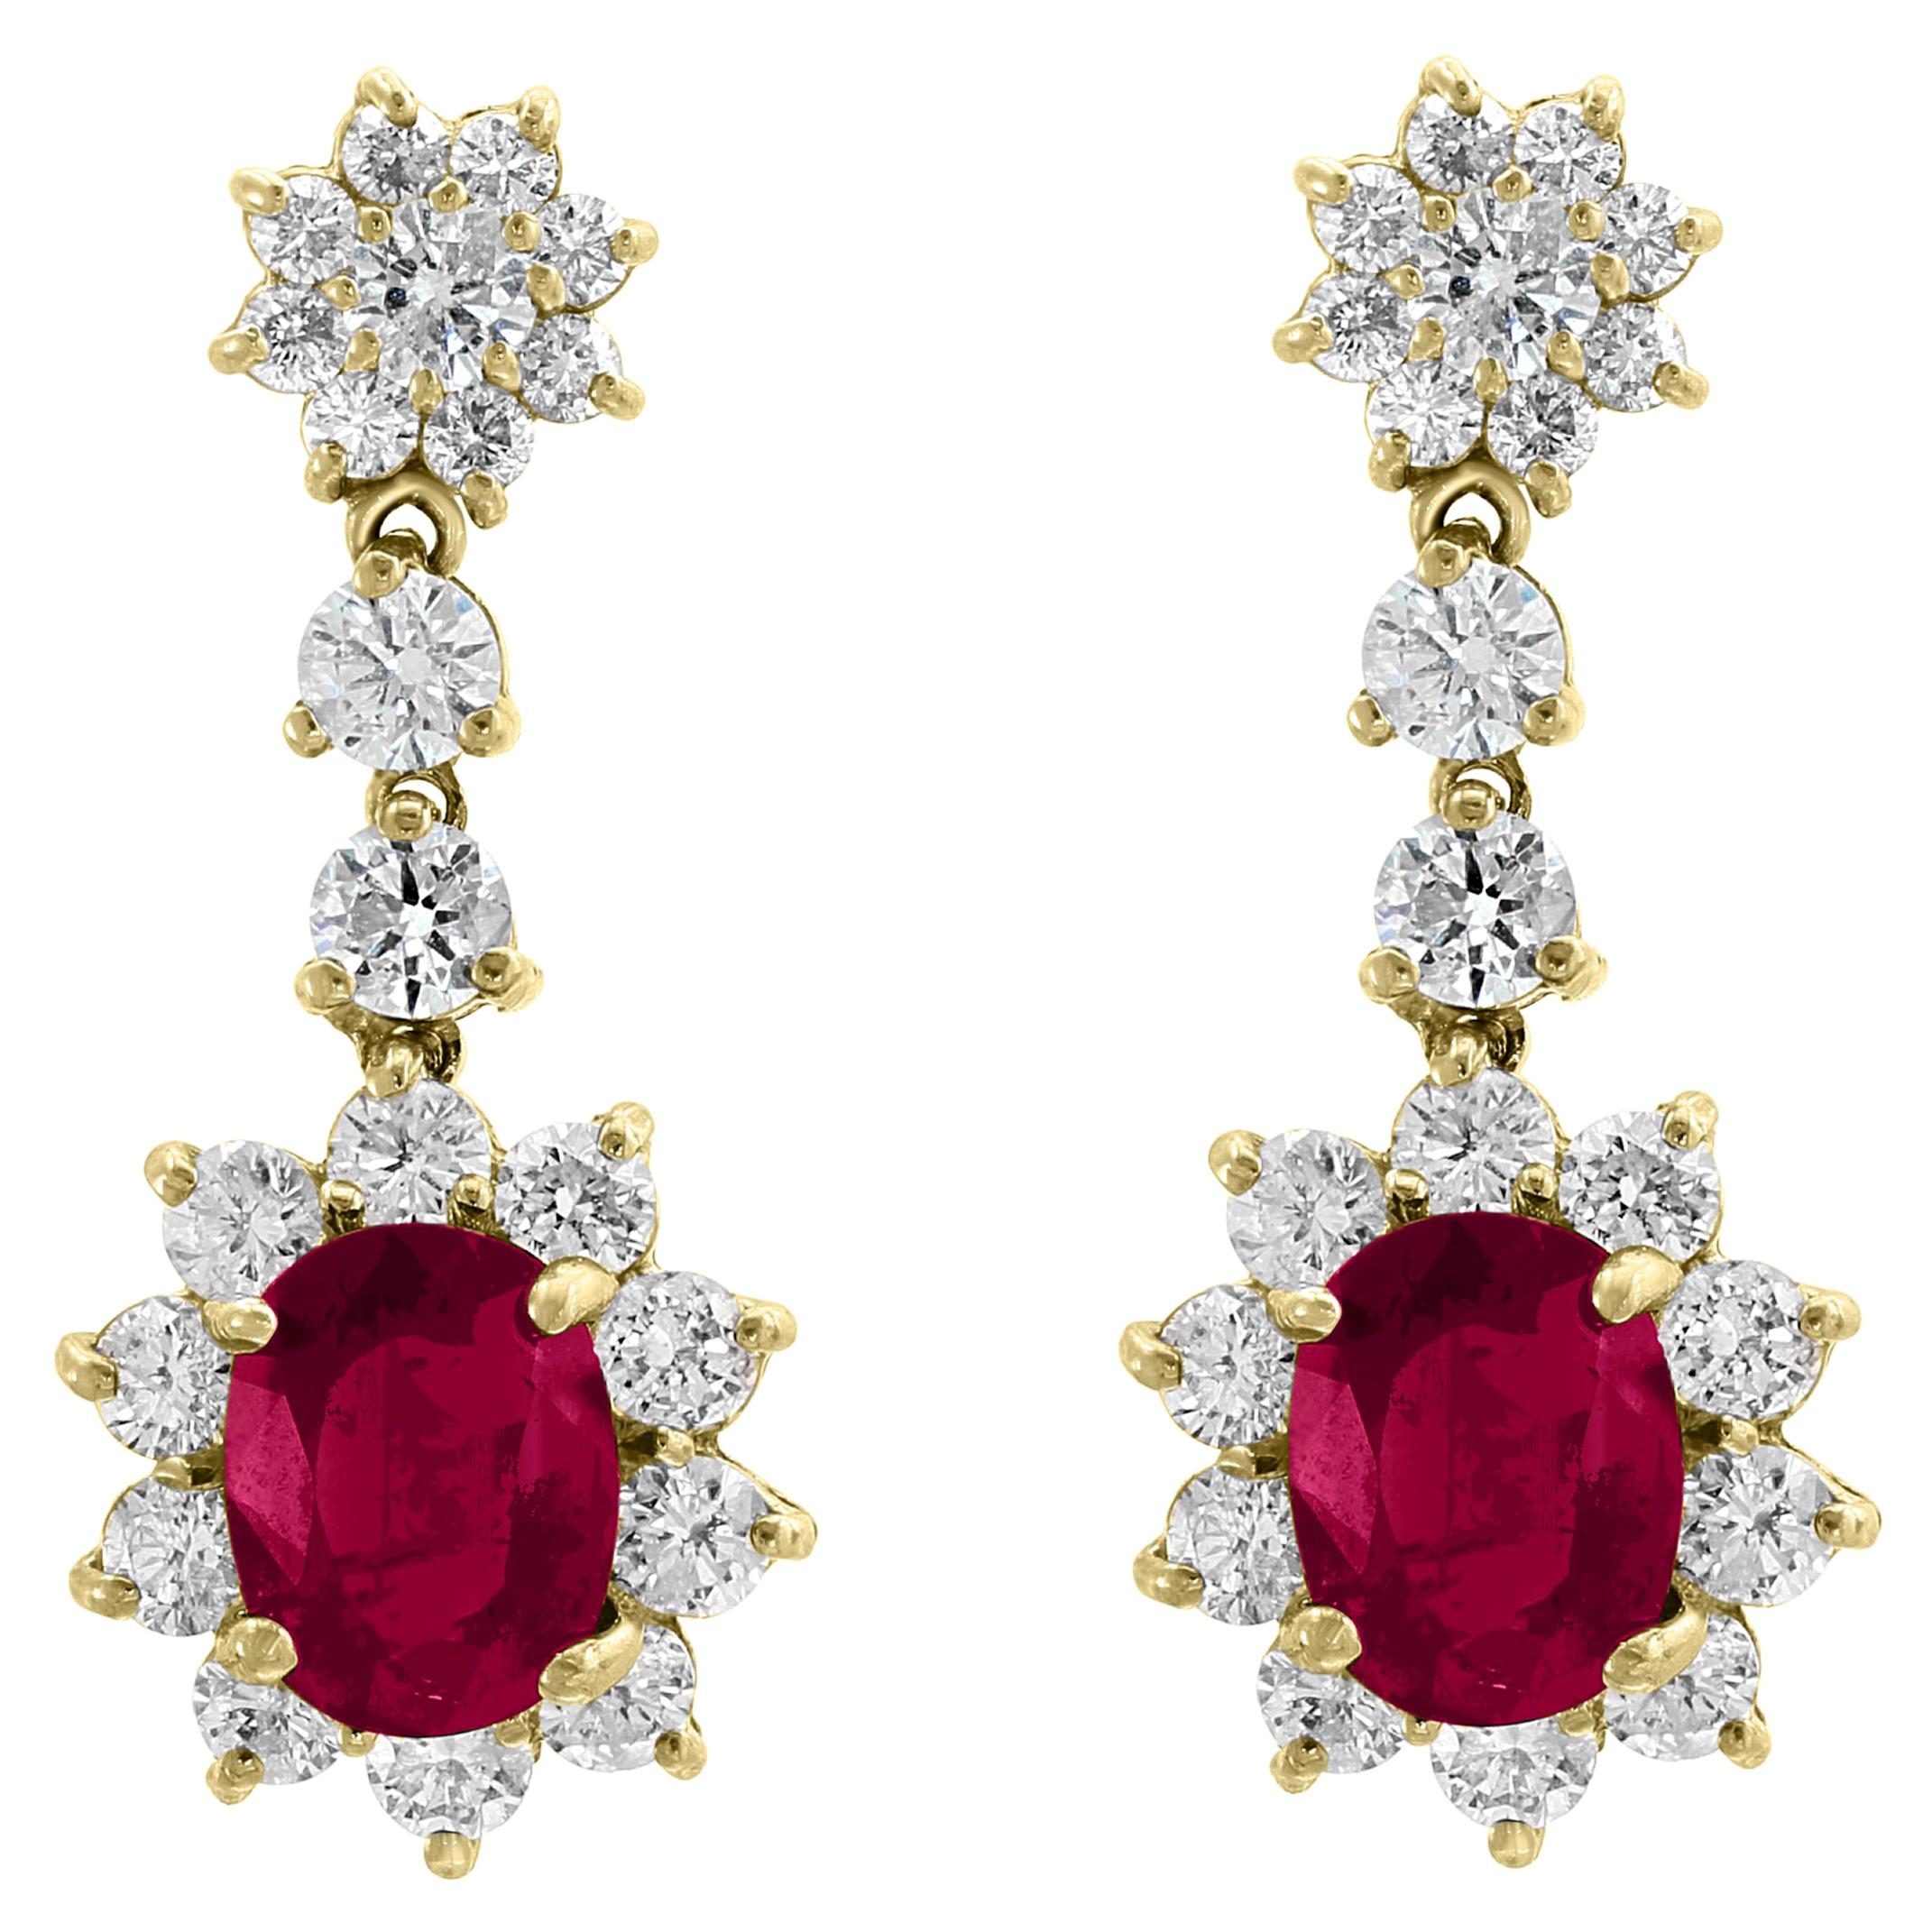 5.5 Carat Ruby and 5 Carat Diamond Hanging or Chandelier Earrings 18 Karat Gold